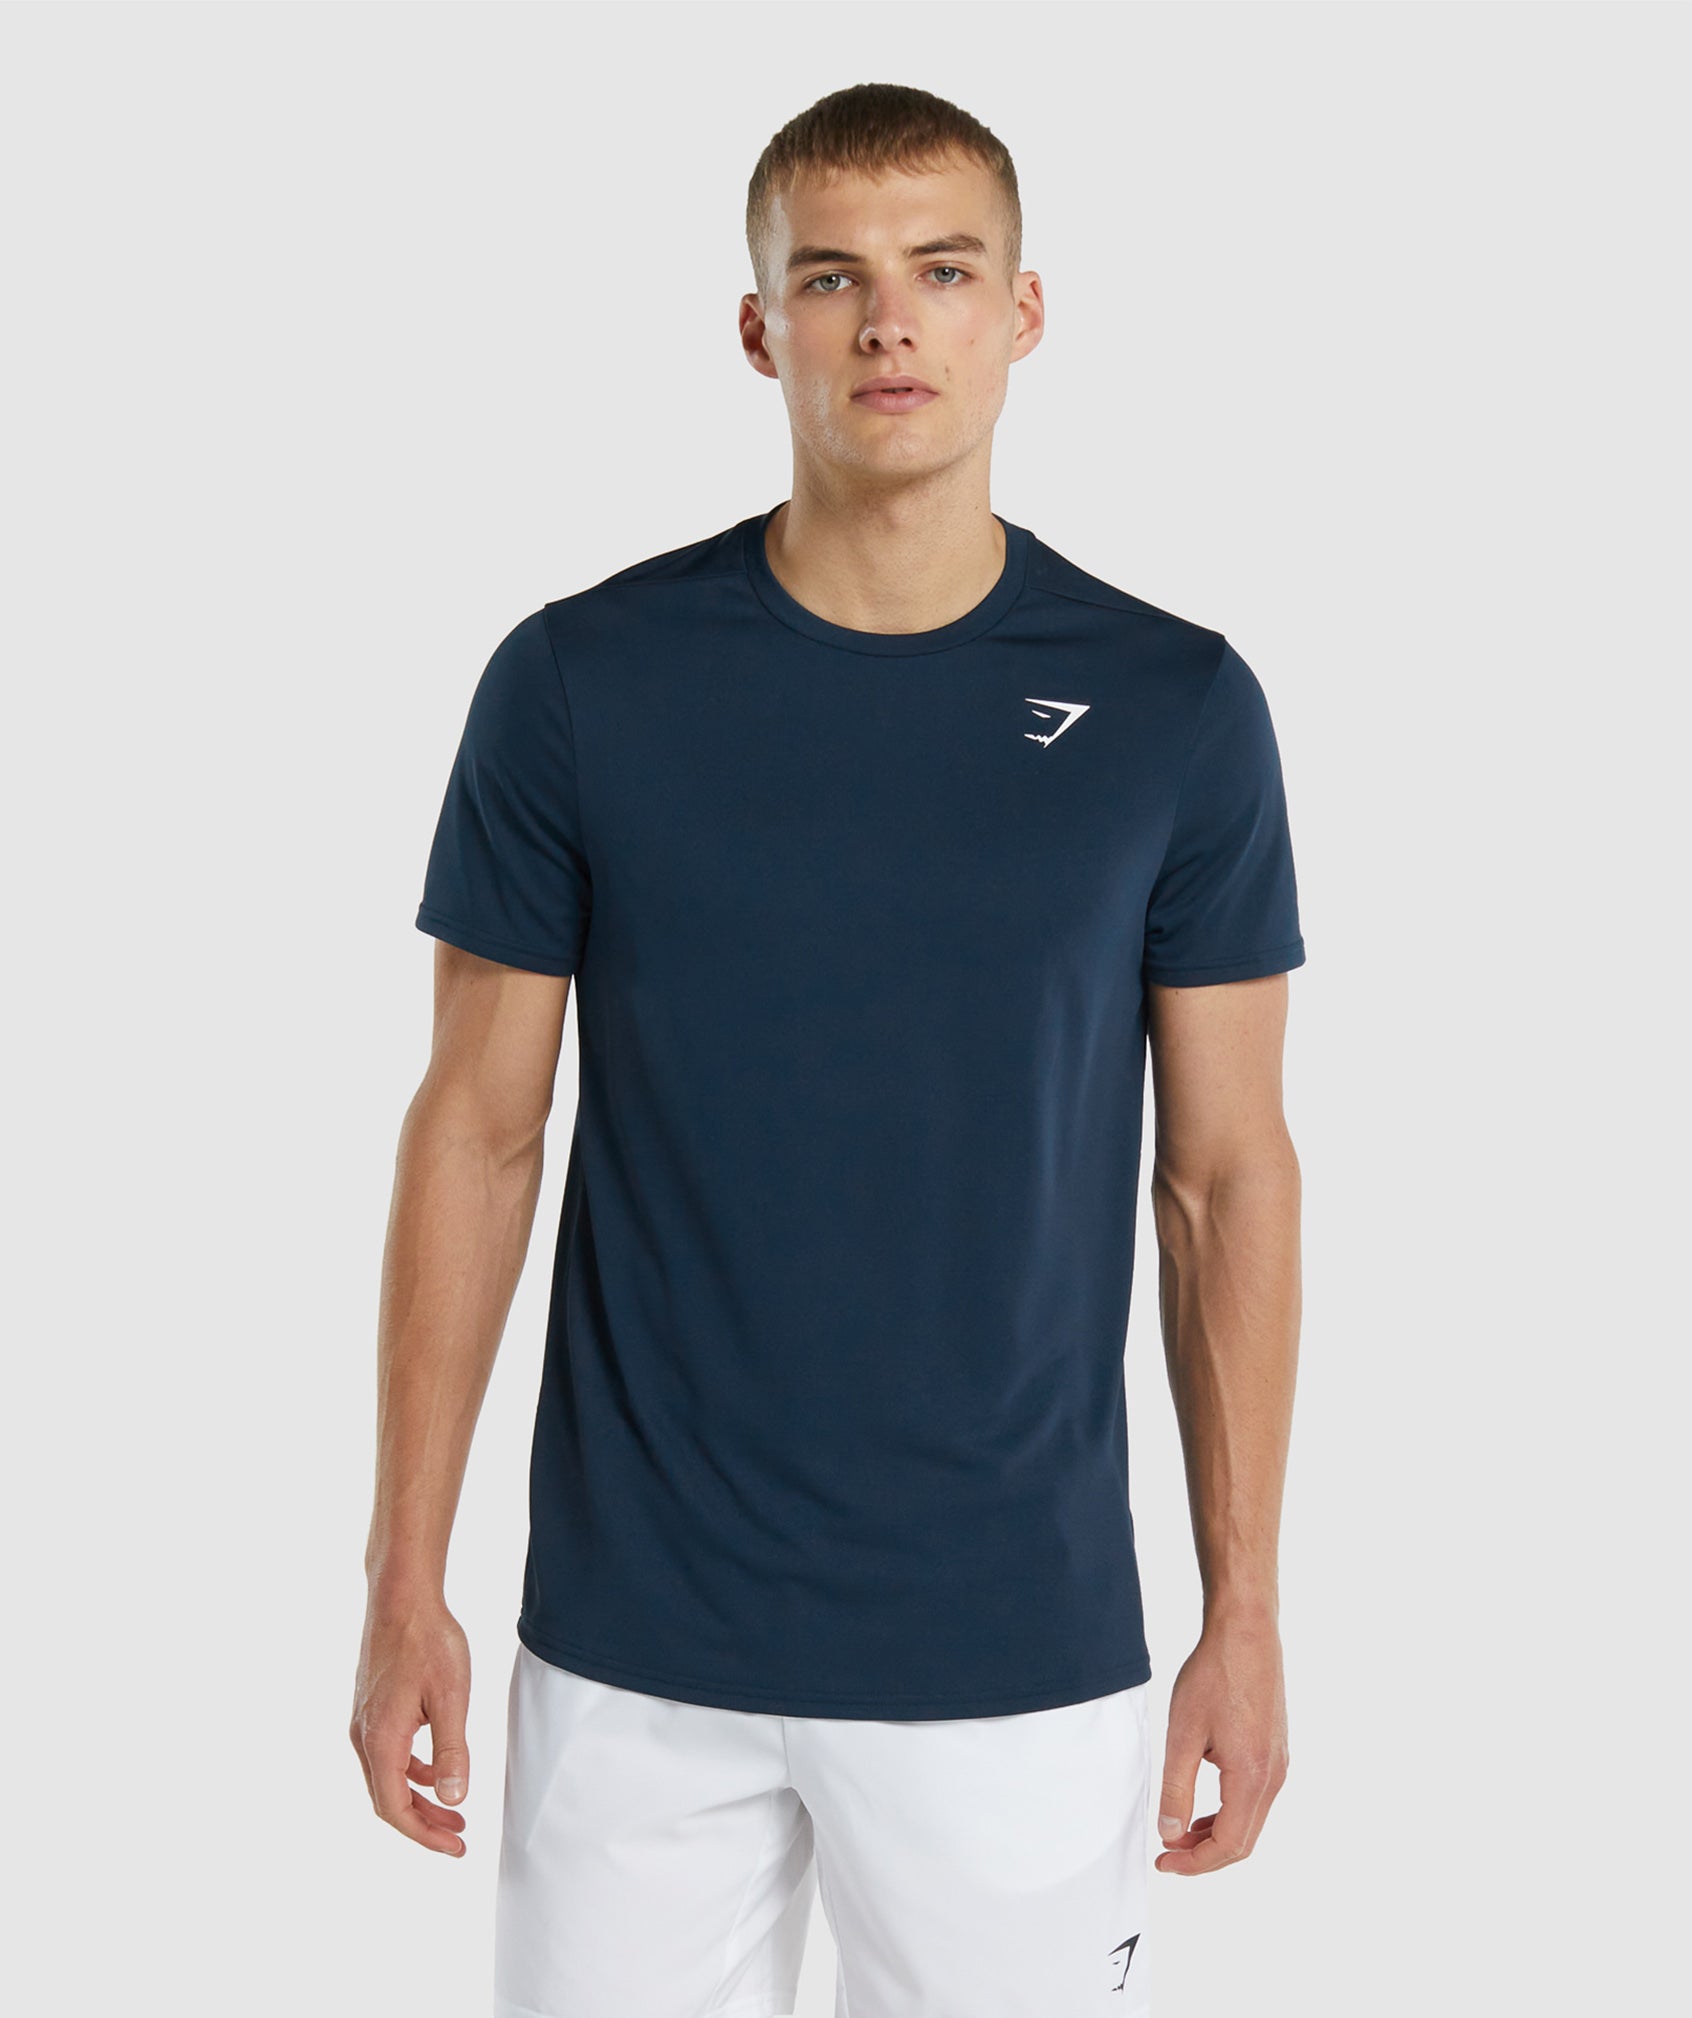 Camiseta Gymshark Portugal - Gymshark Recess Homem Branco Azuis